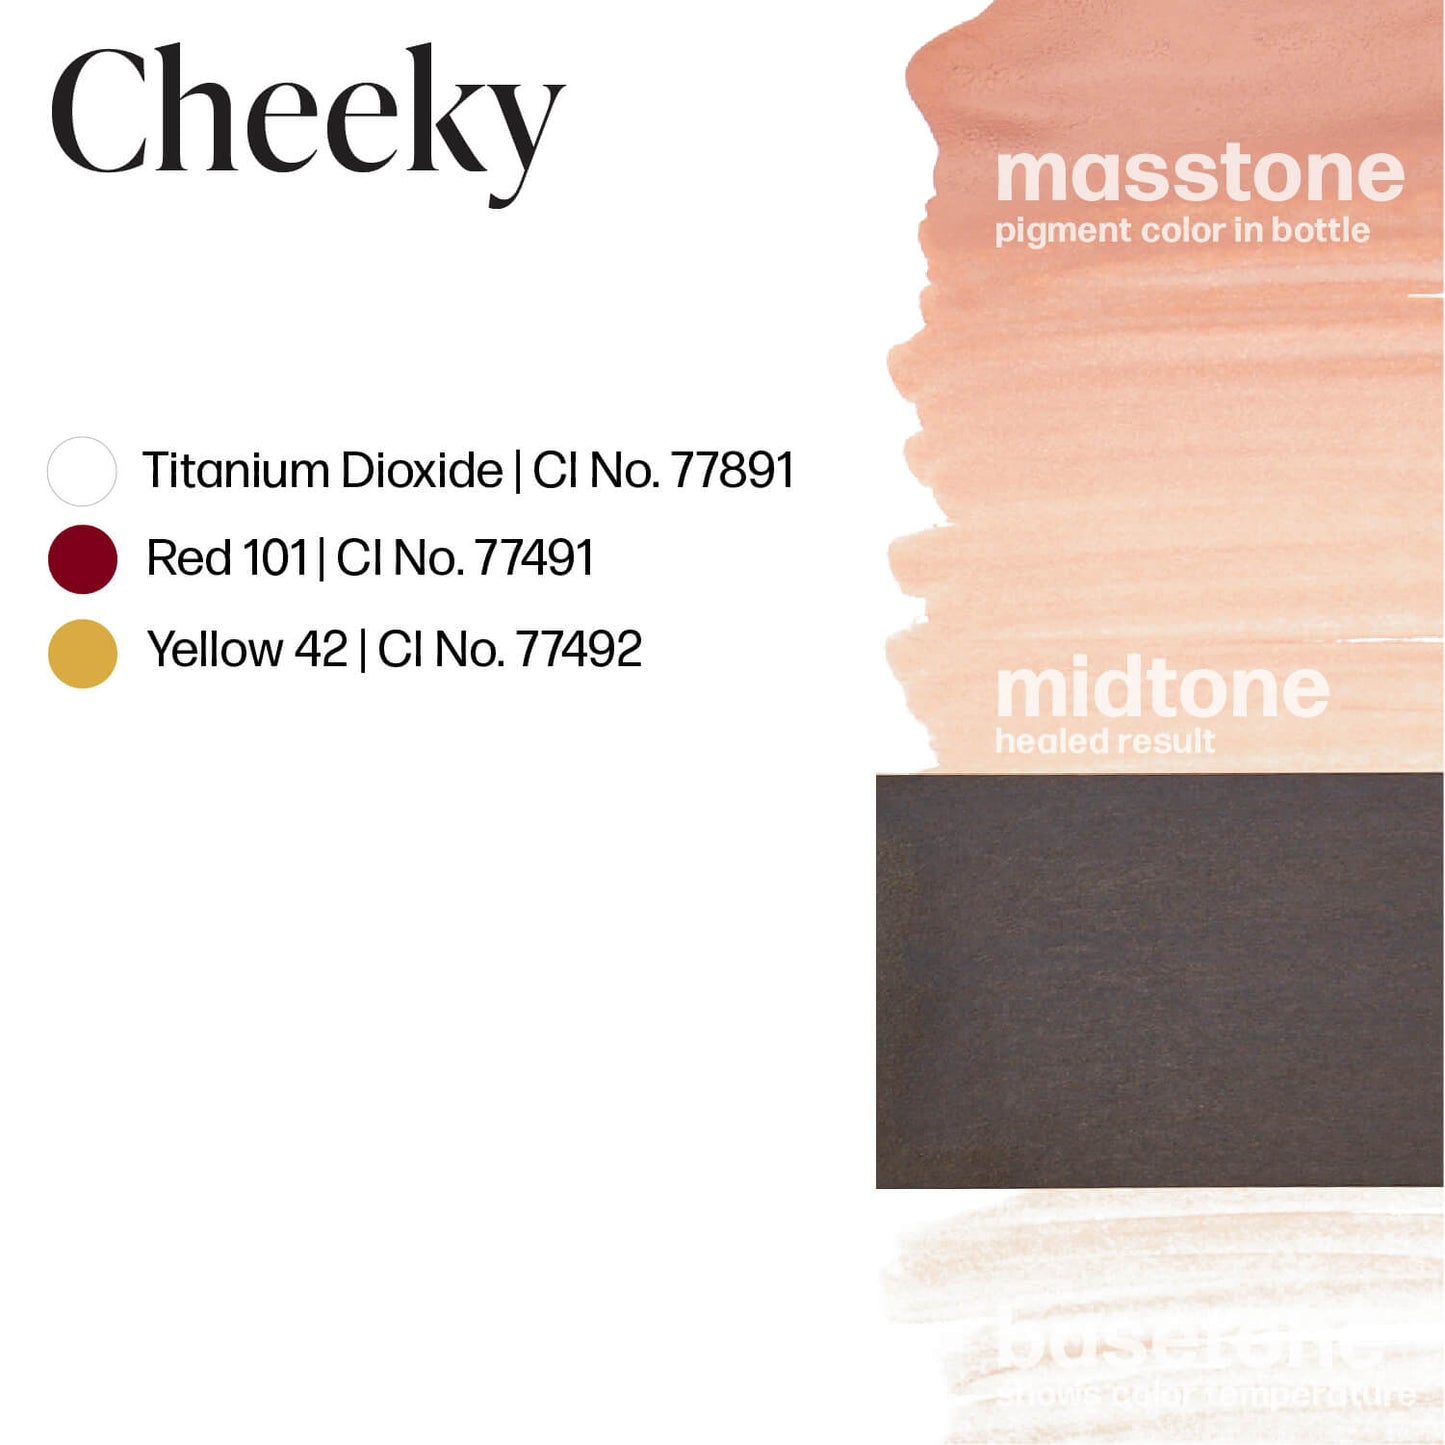 Perma Blend Cheeky Lip Blush Ink Masstone Midtone Basetone